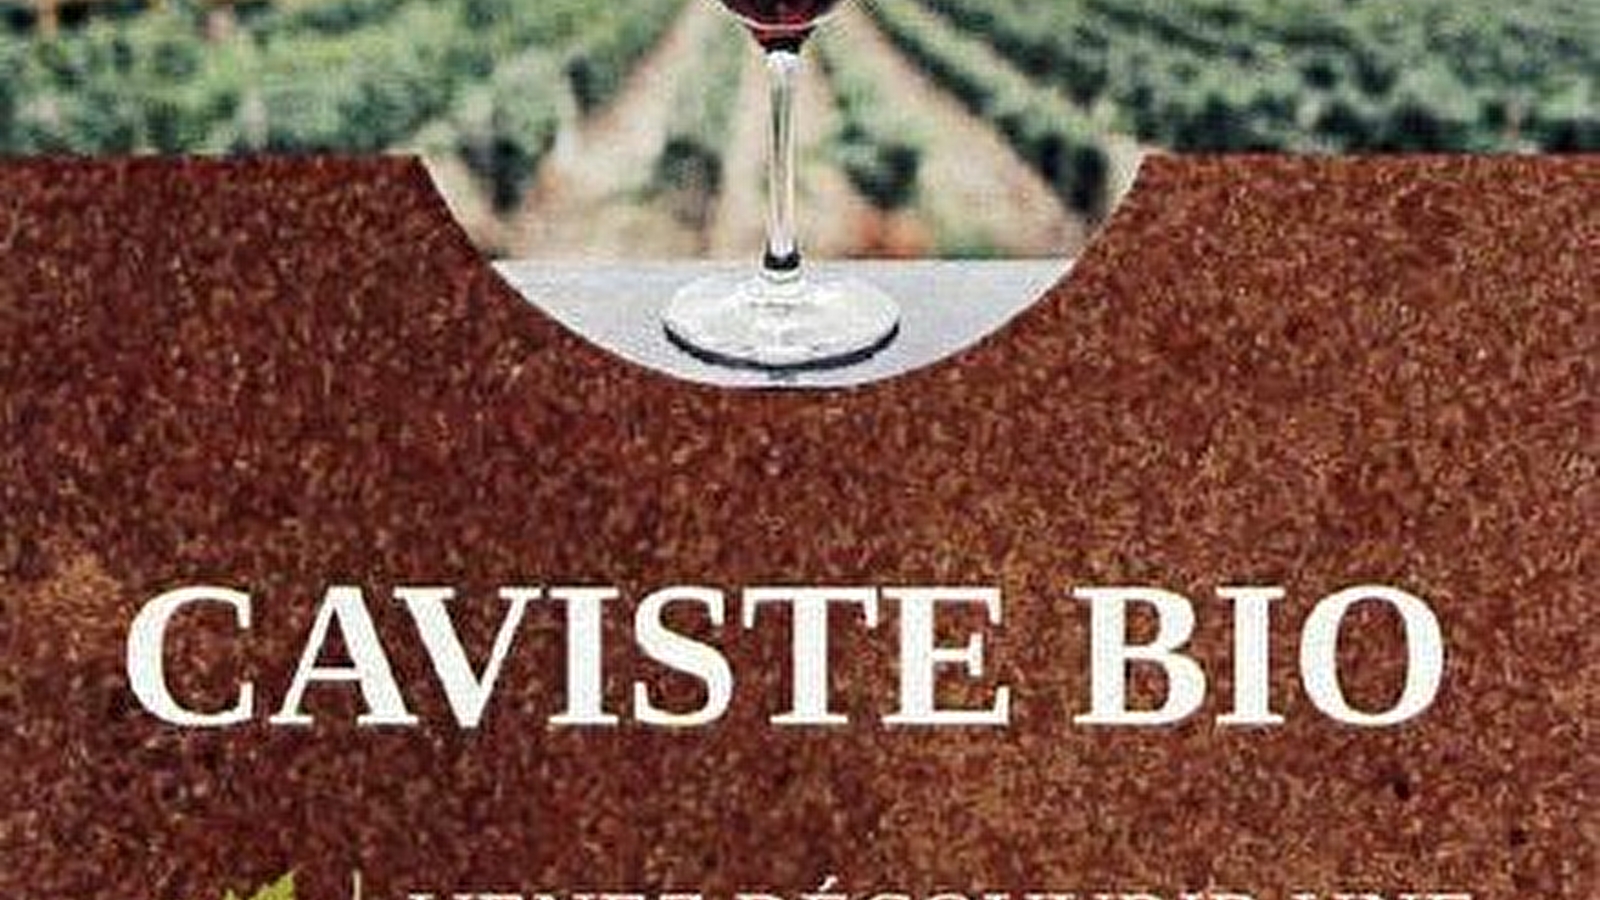 Caviste bio - Vin Art & Plaisir